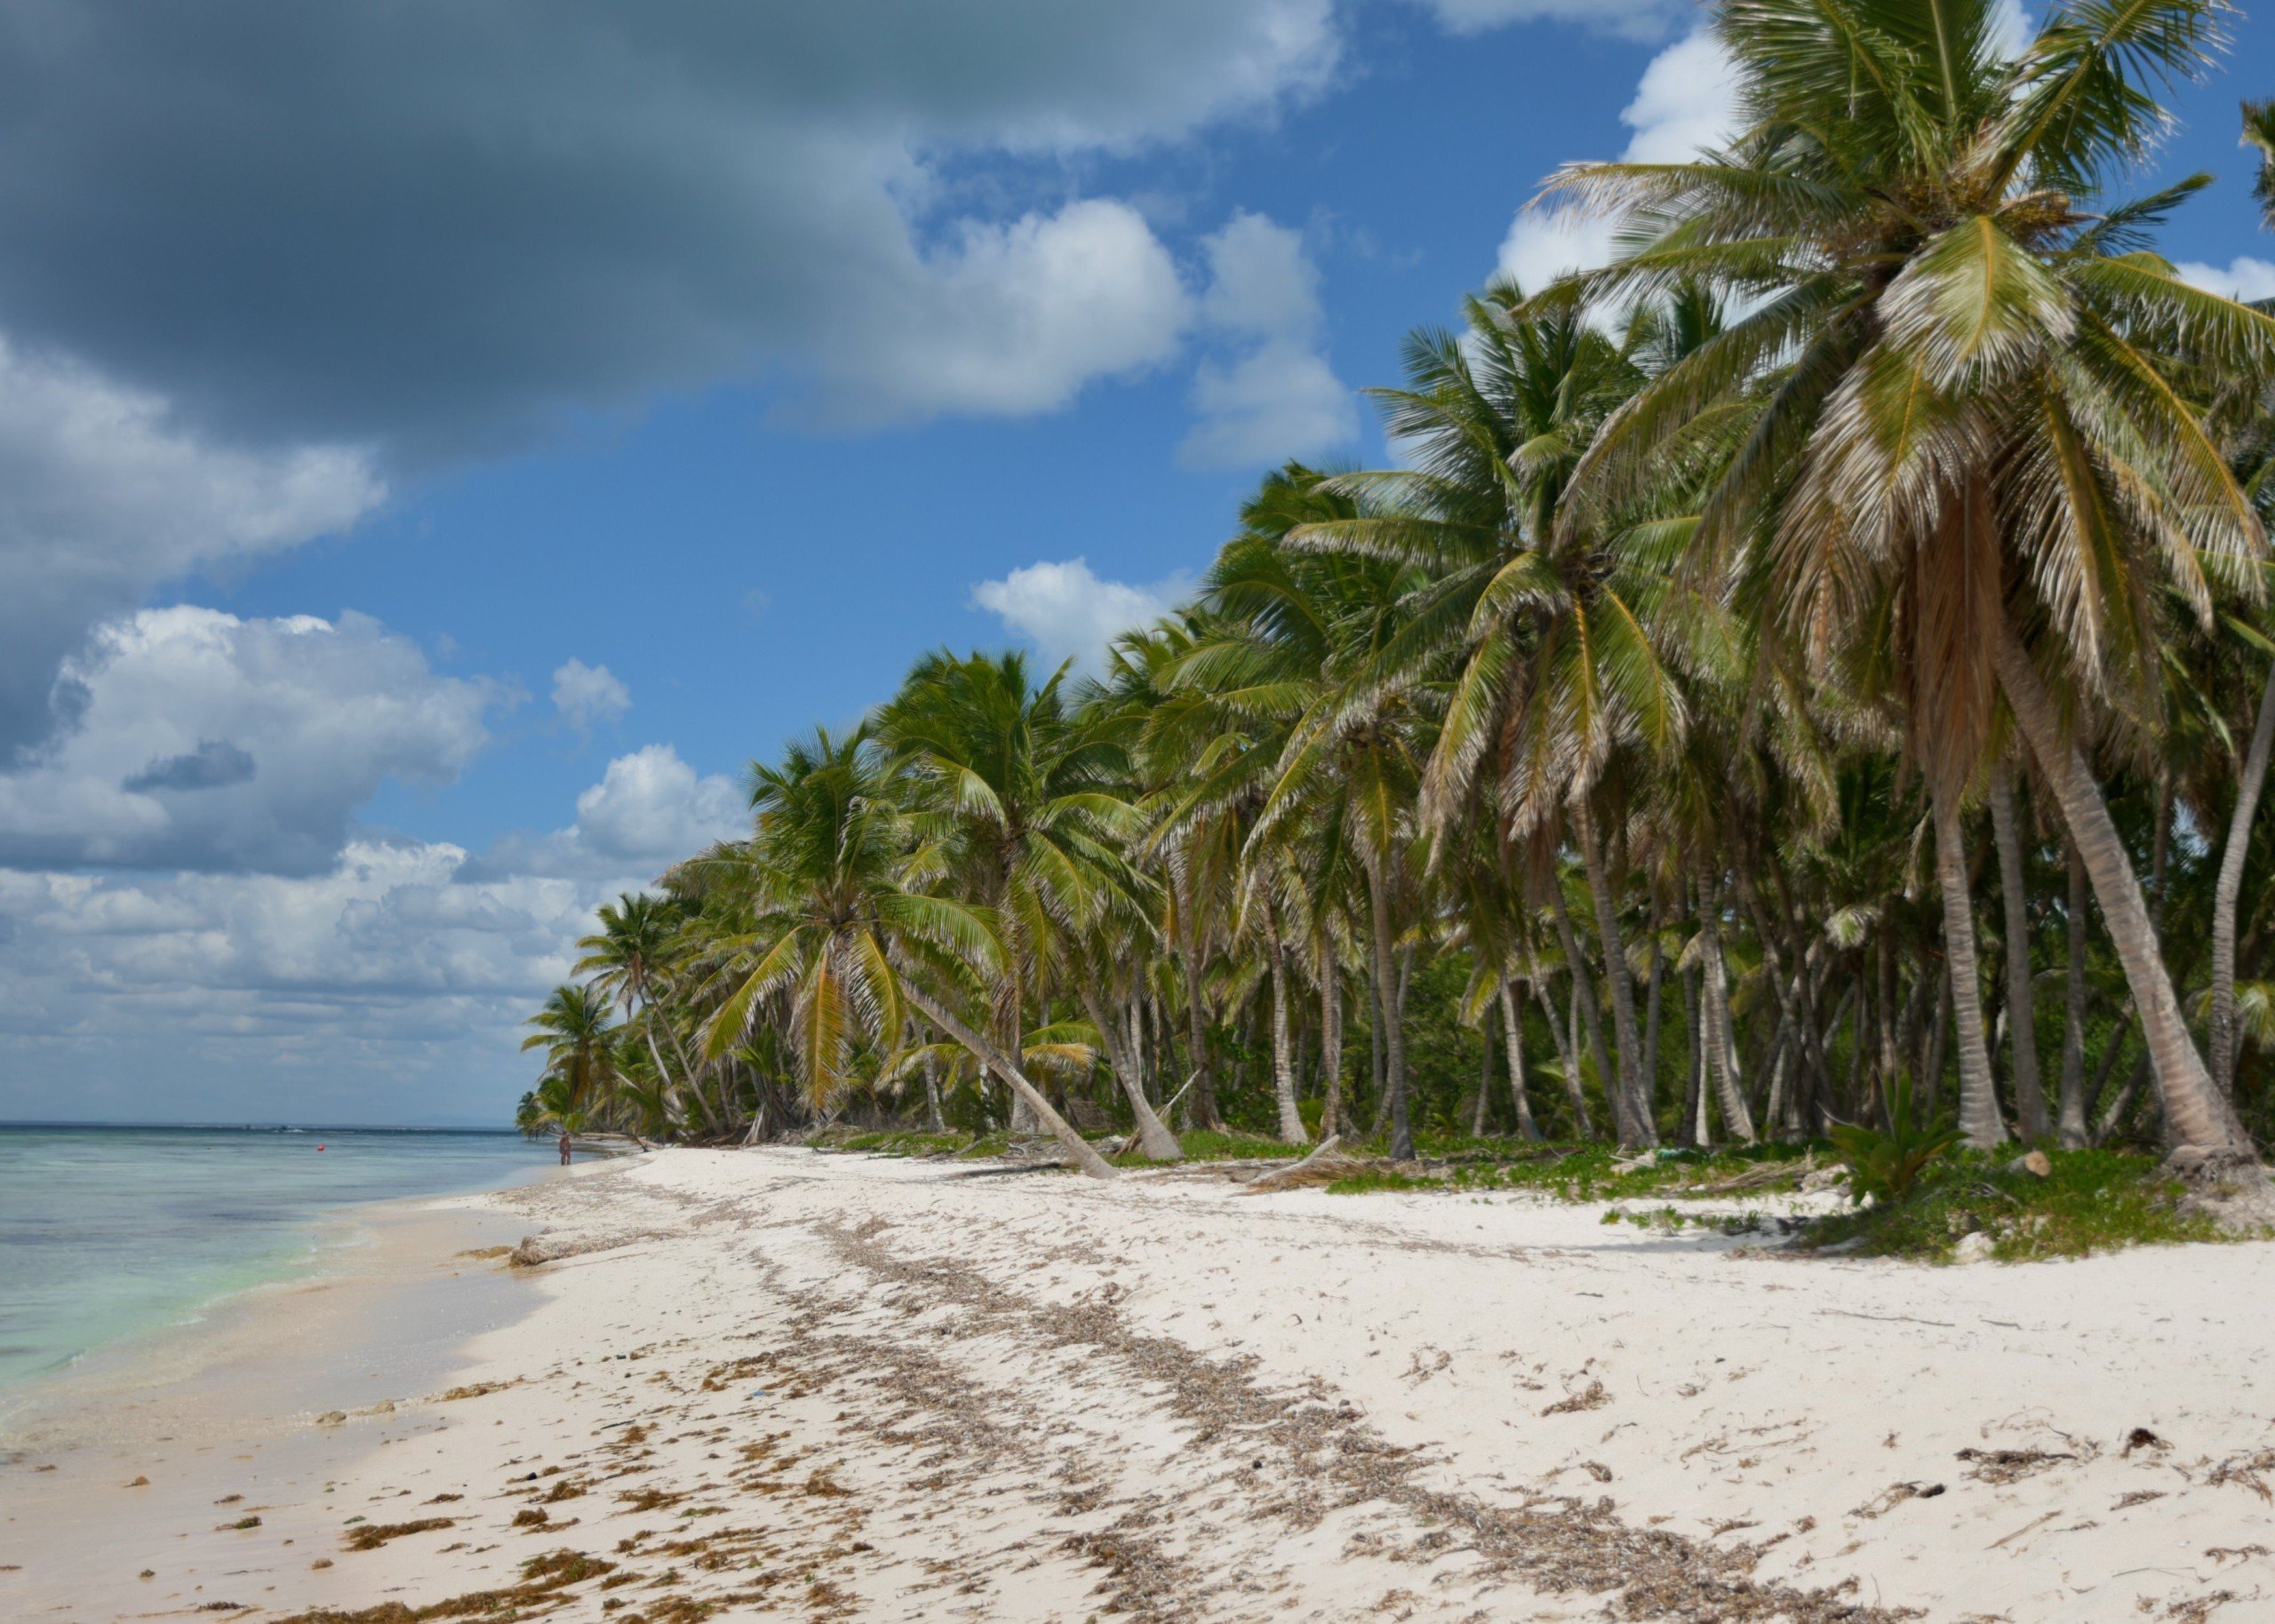 Deserted beach of Saona Island